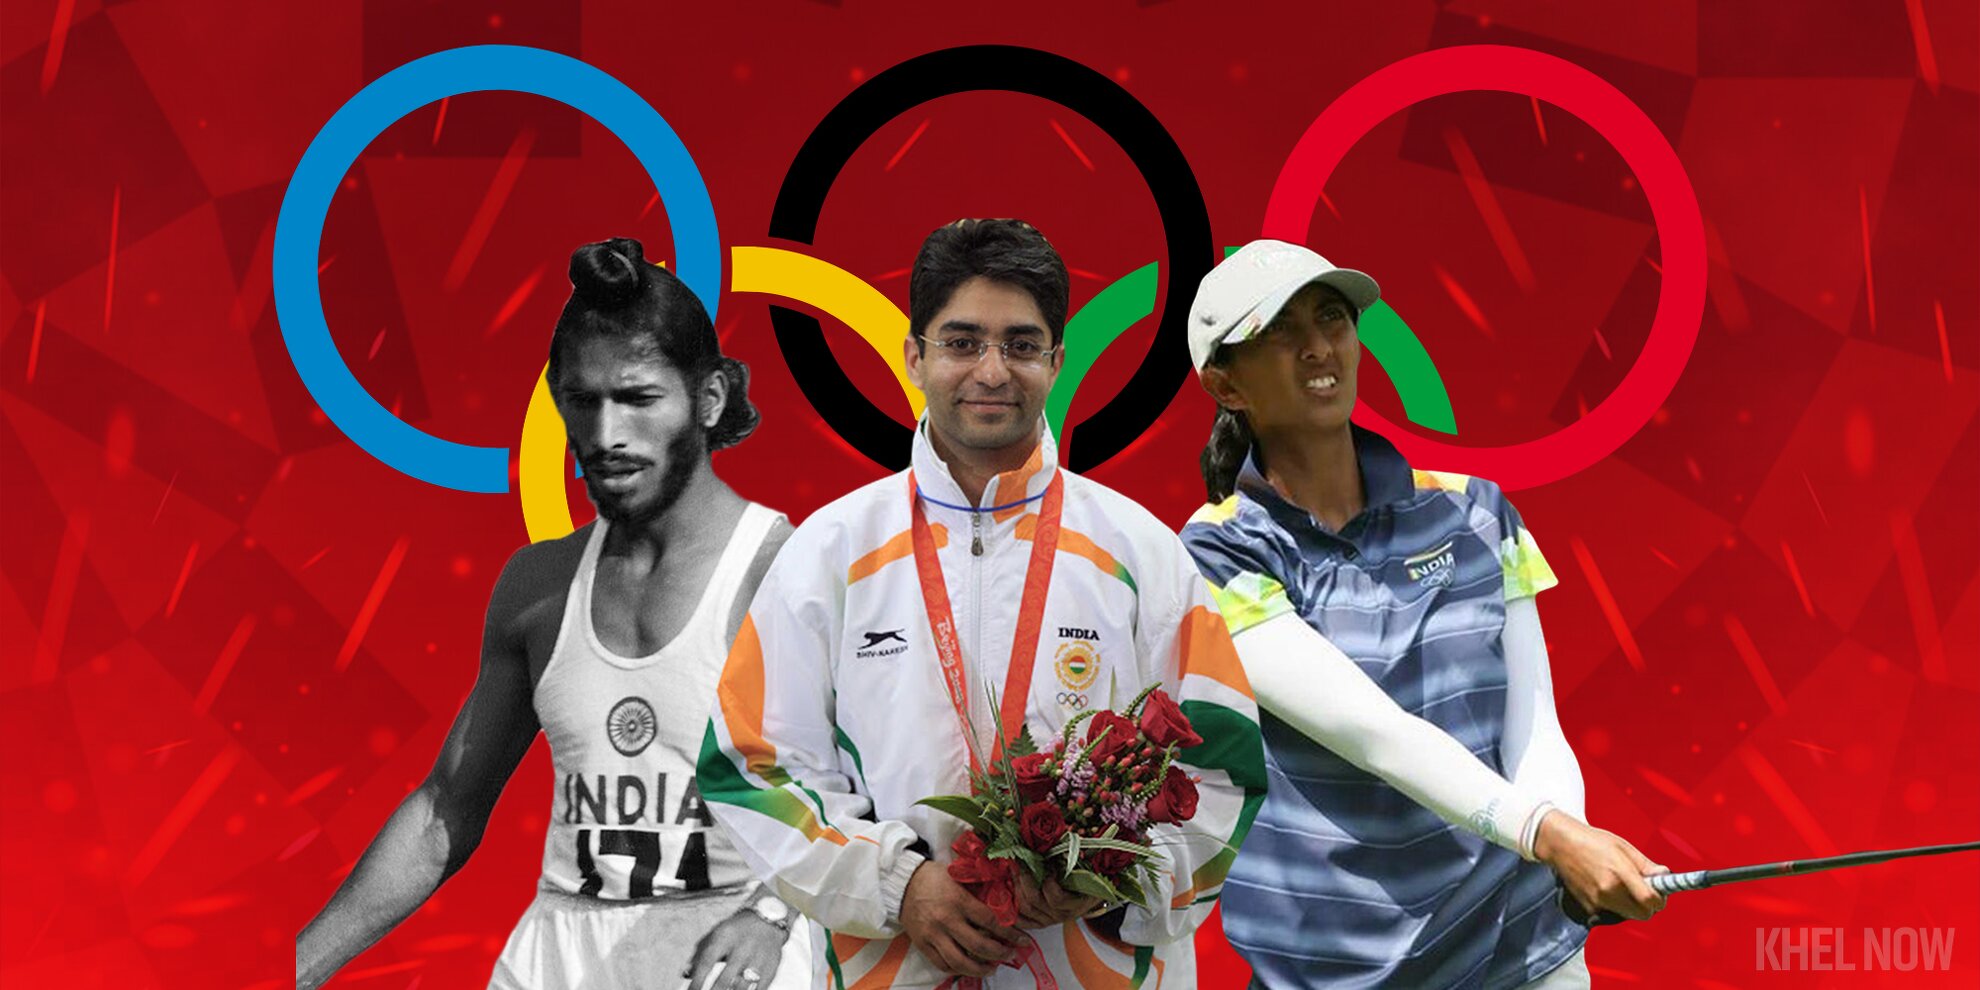 Indian athletes